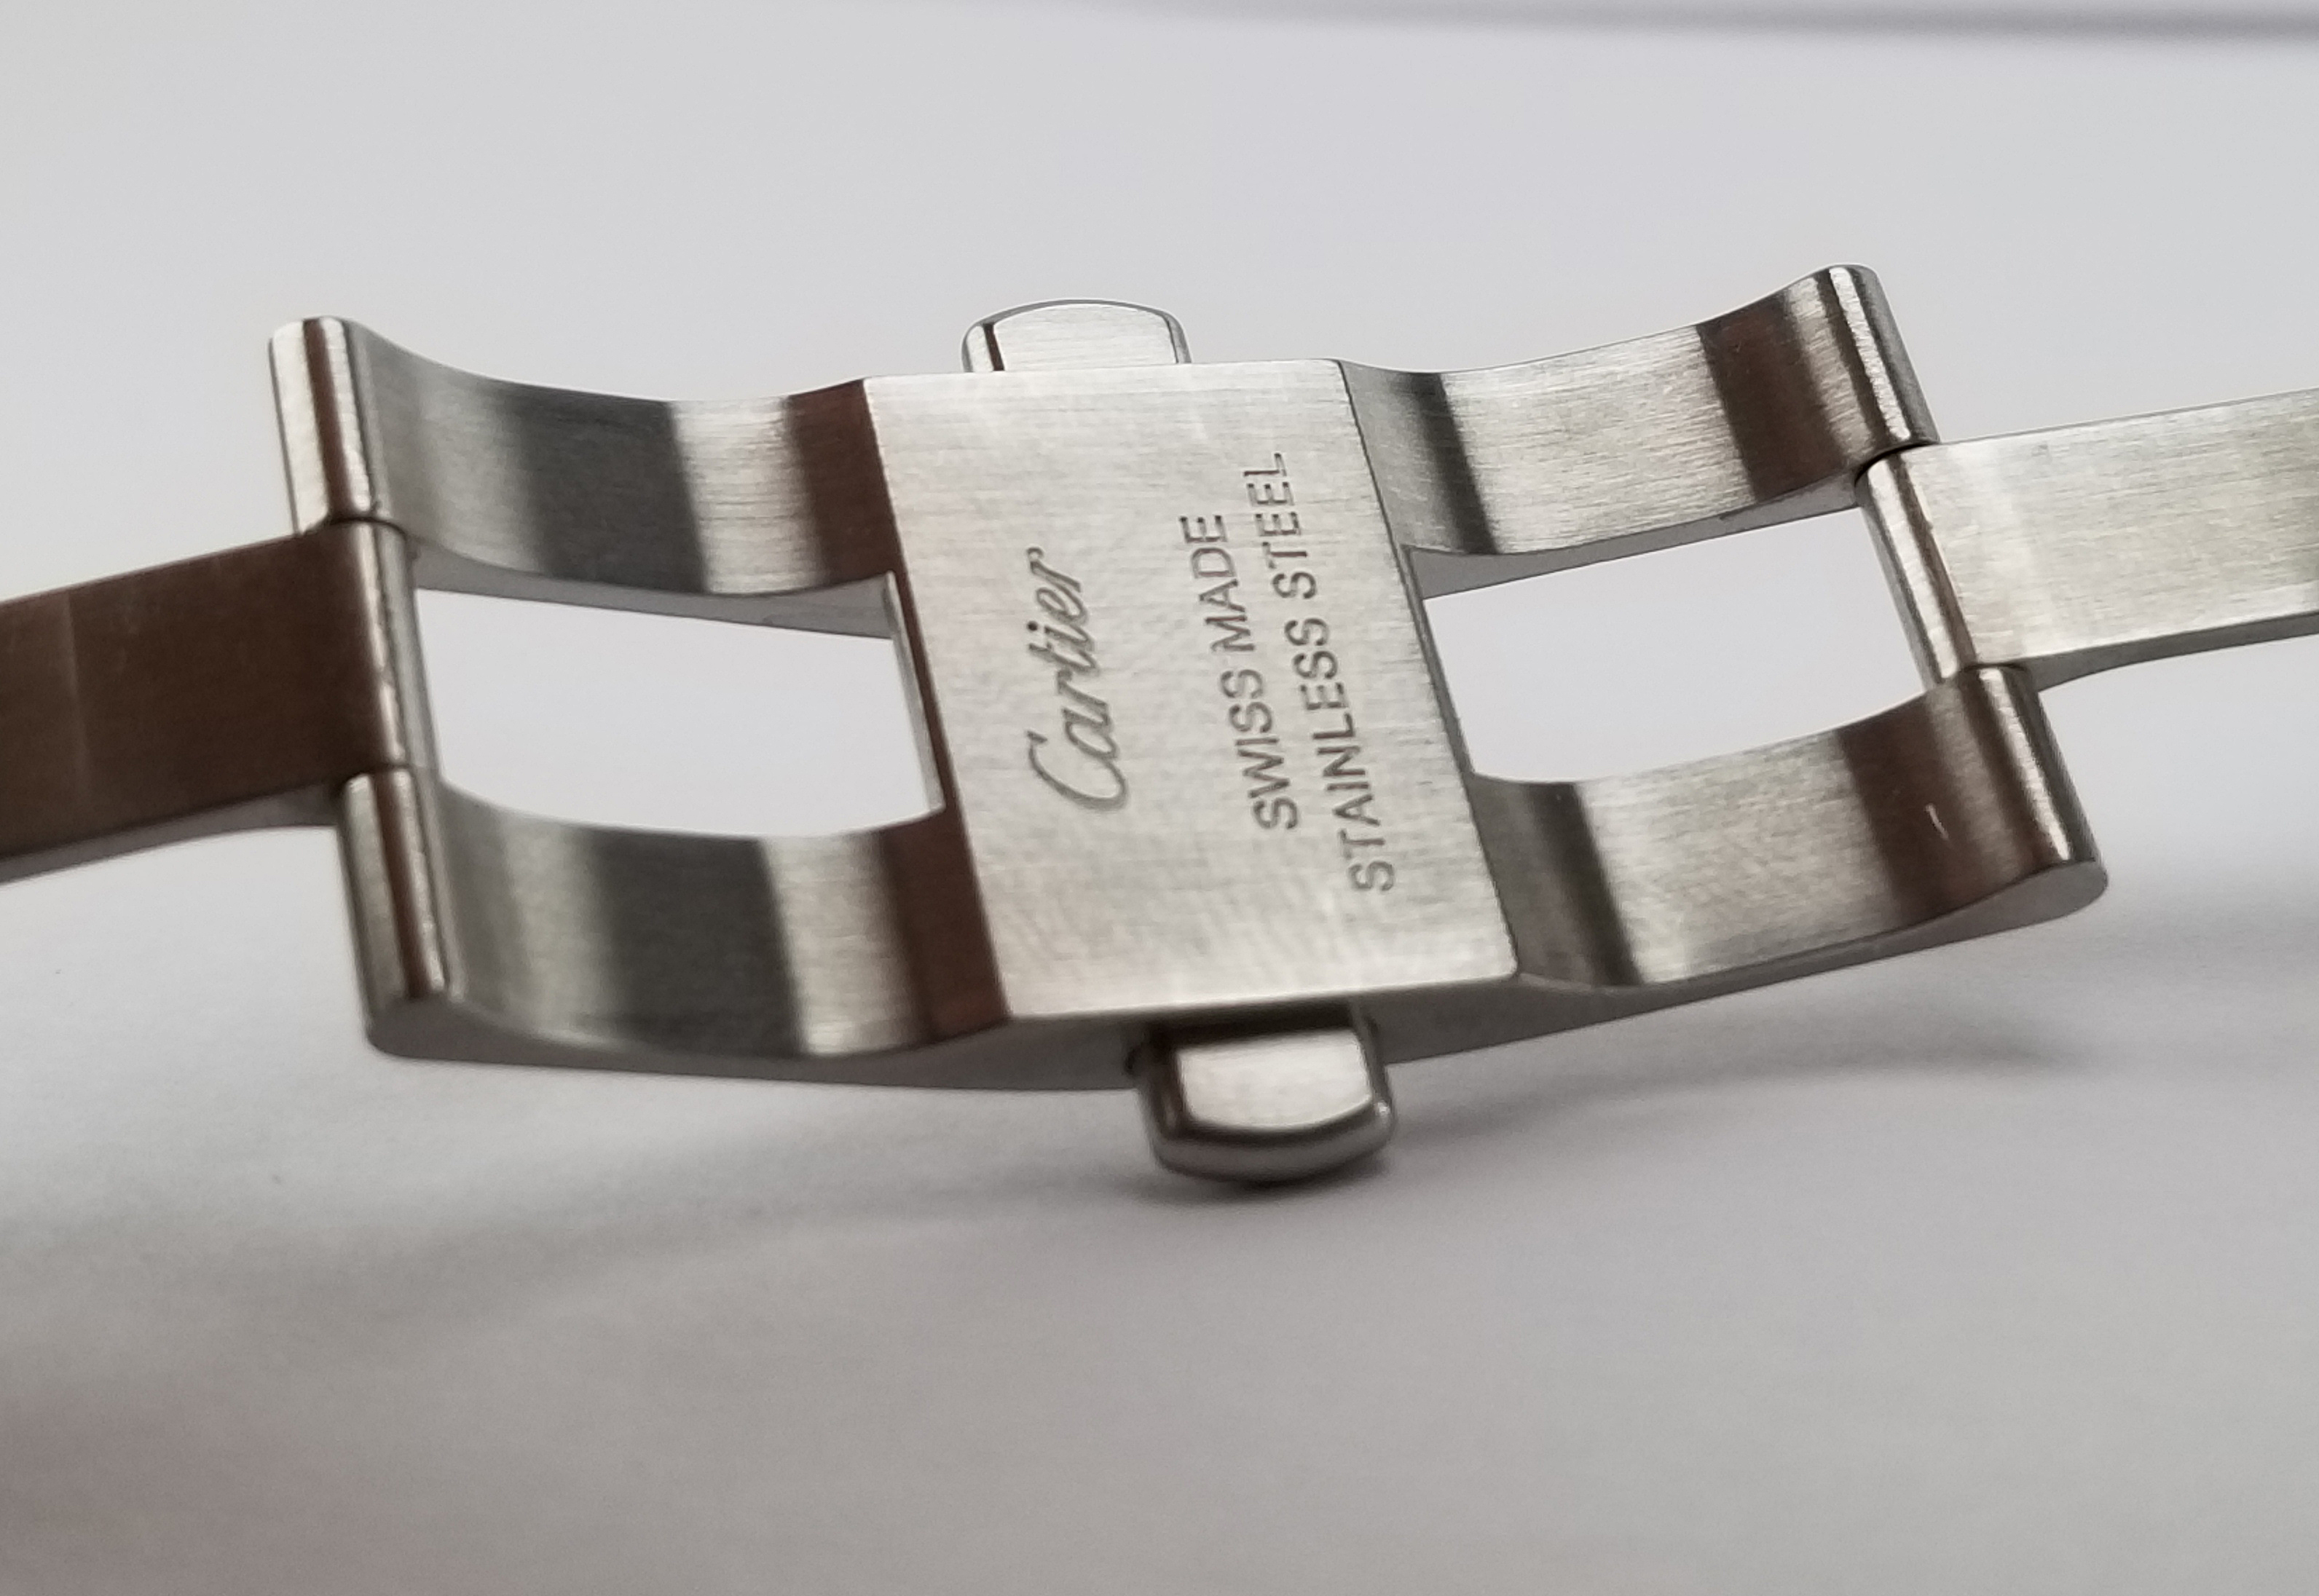 Calibre De Cartier W7100036 Men's Watch - Image 6 of 8